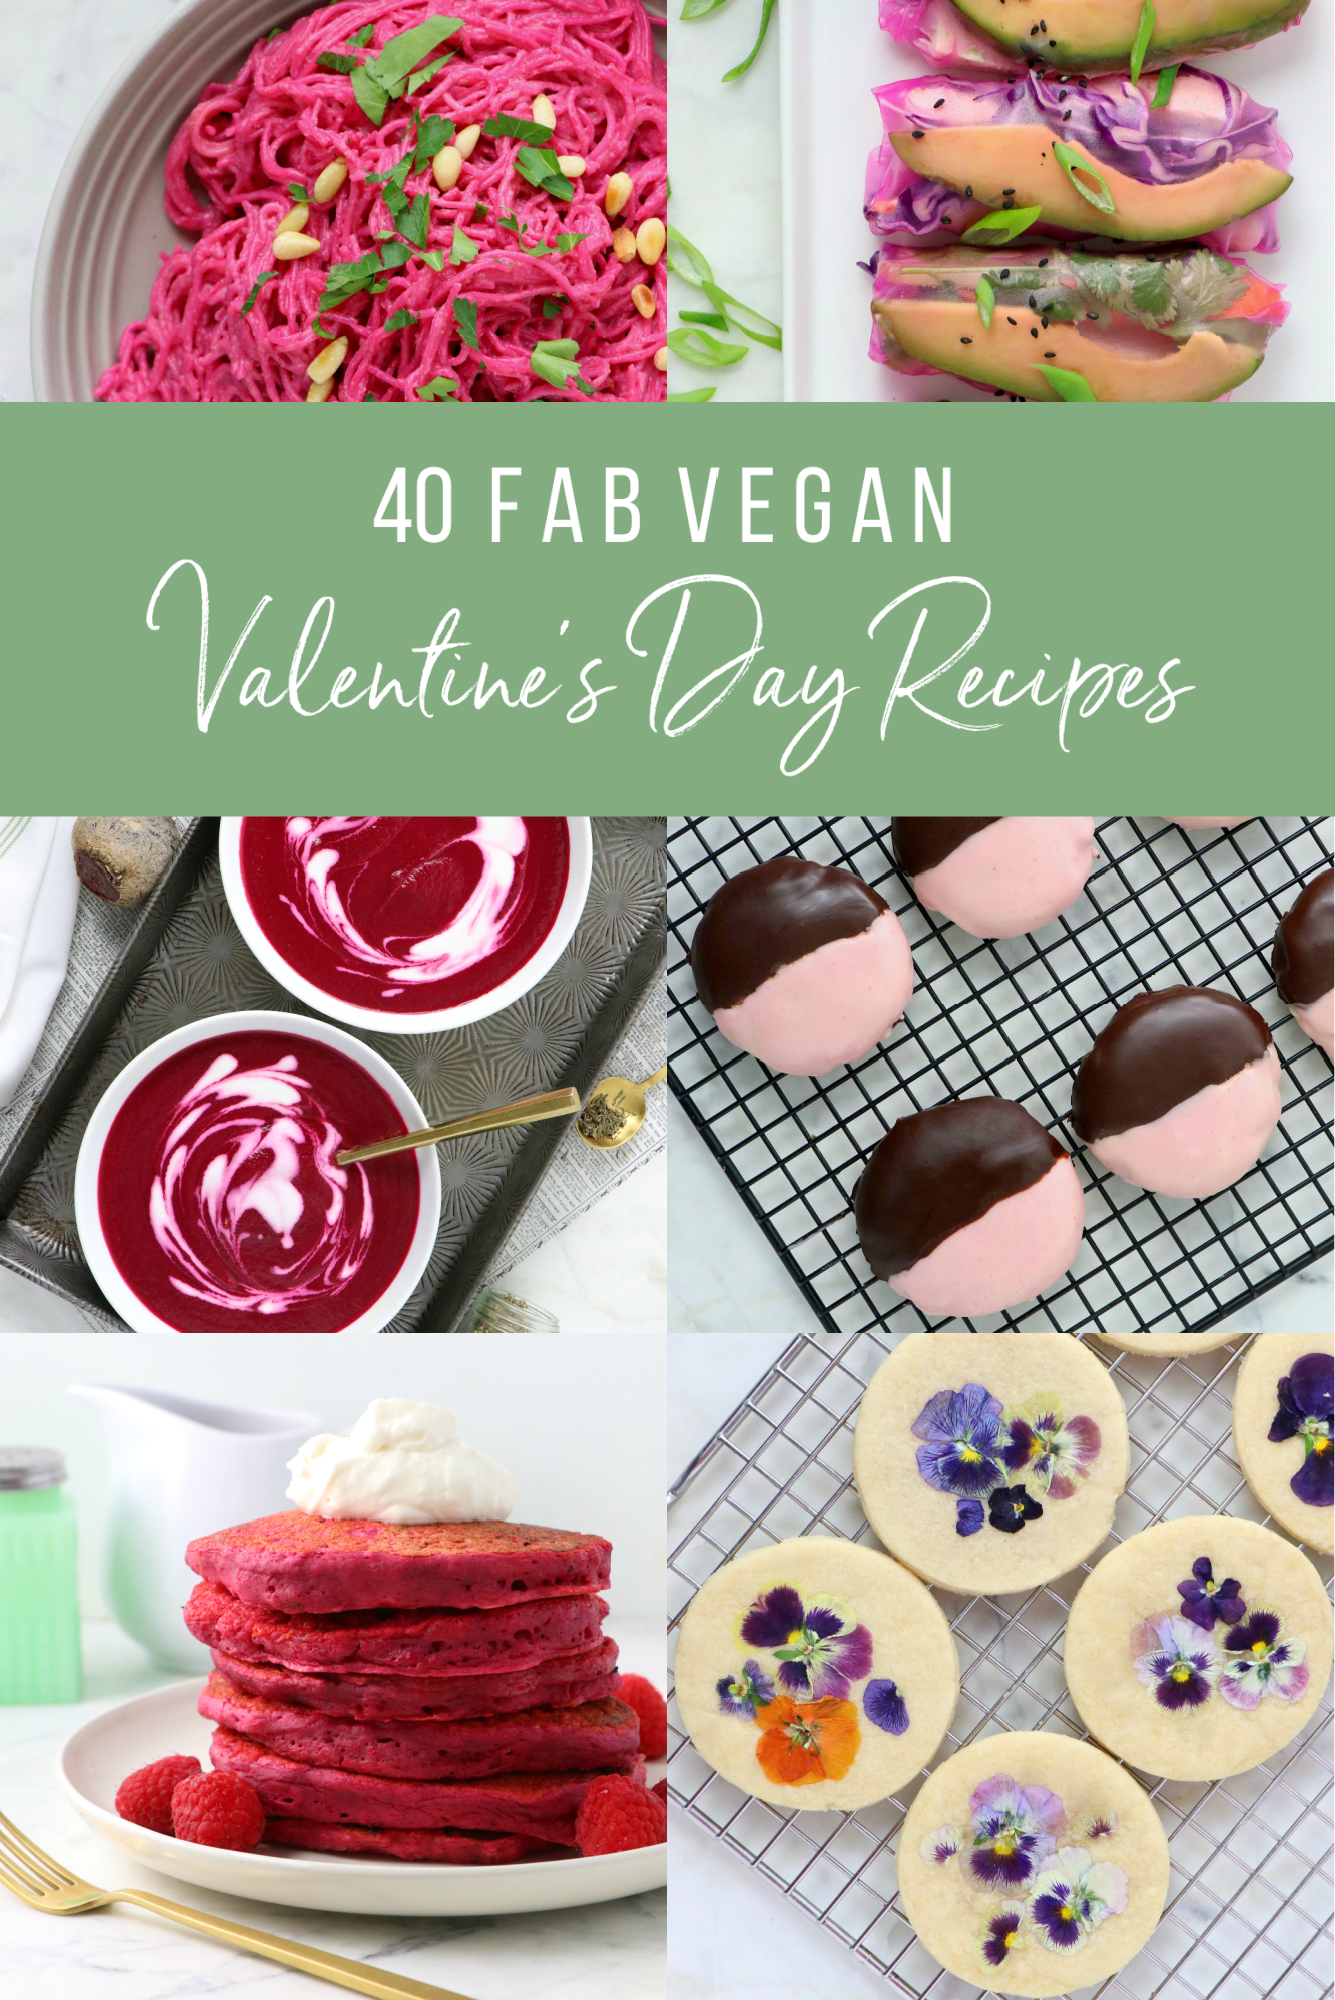 Vegan Valentine’s Day Recipes